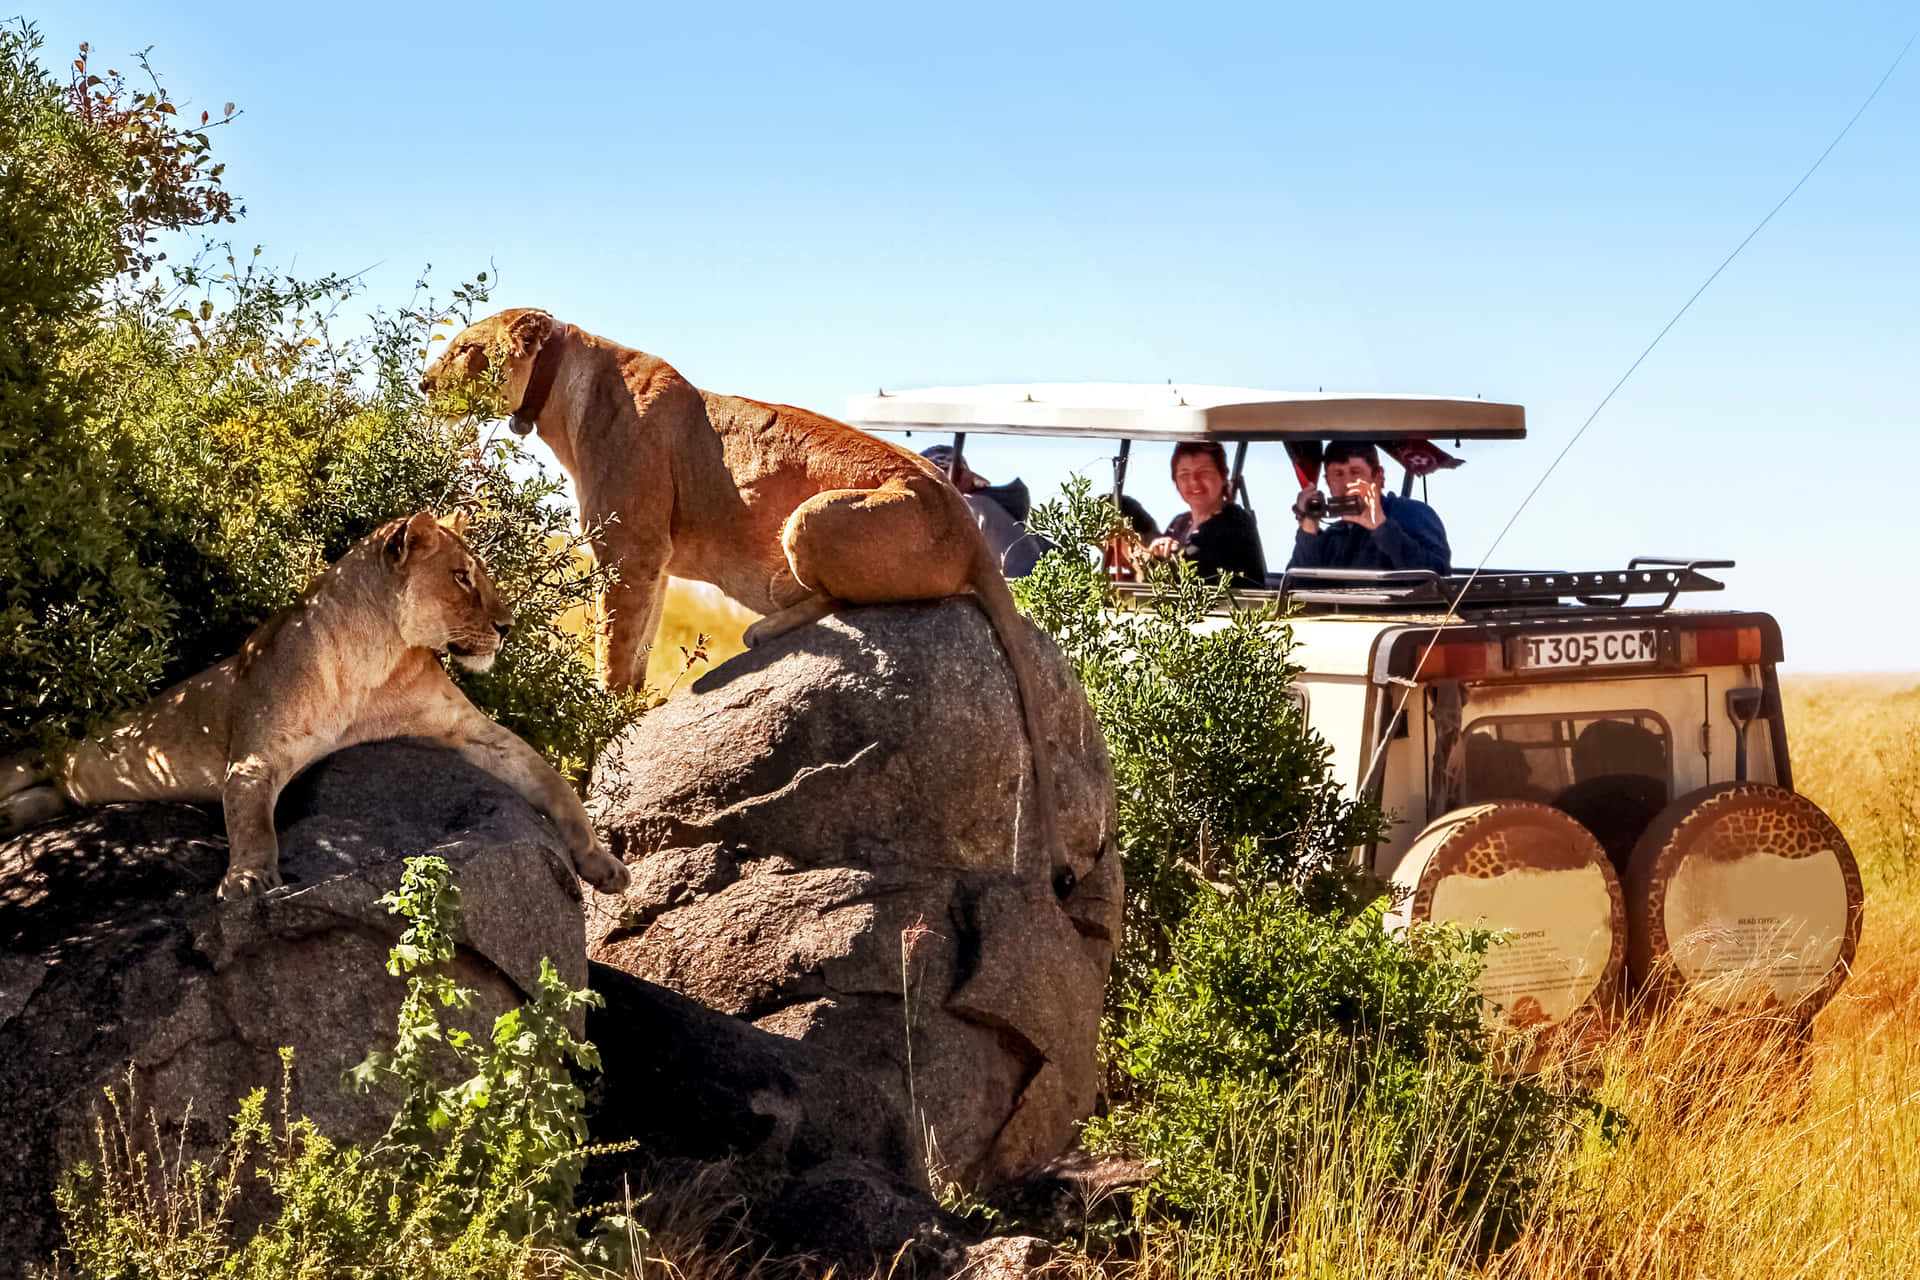 A Safari Vehicle With A Lion And A Giraffe